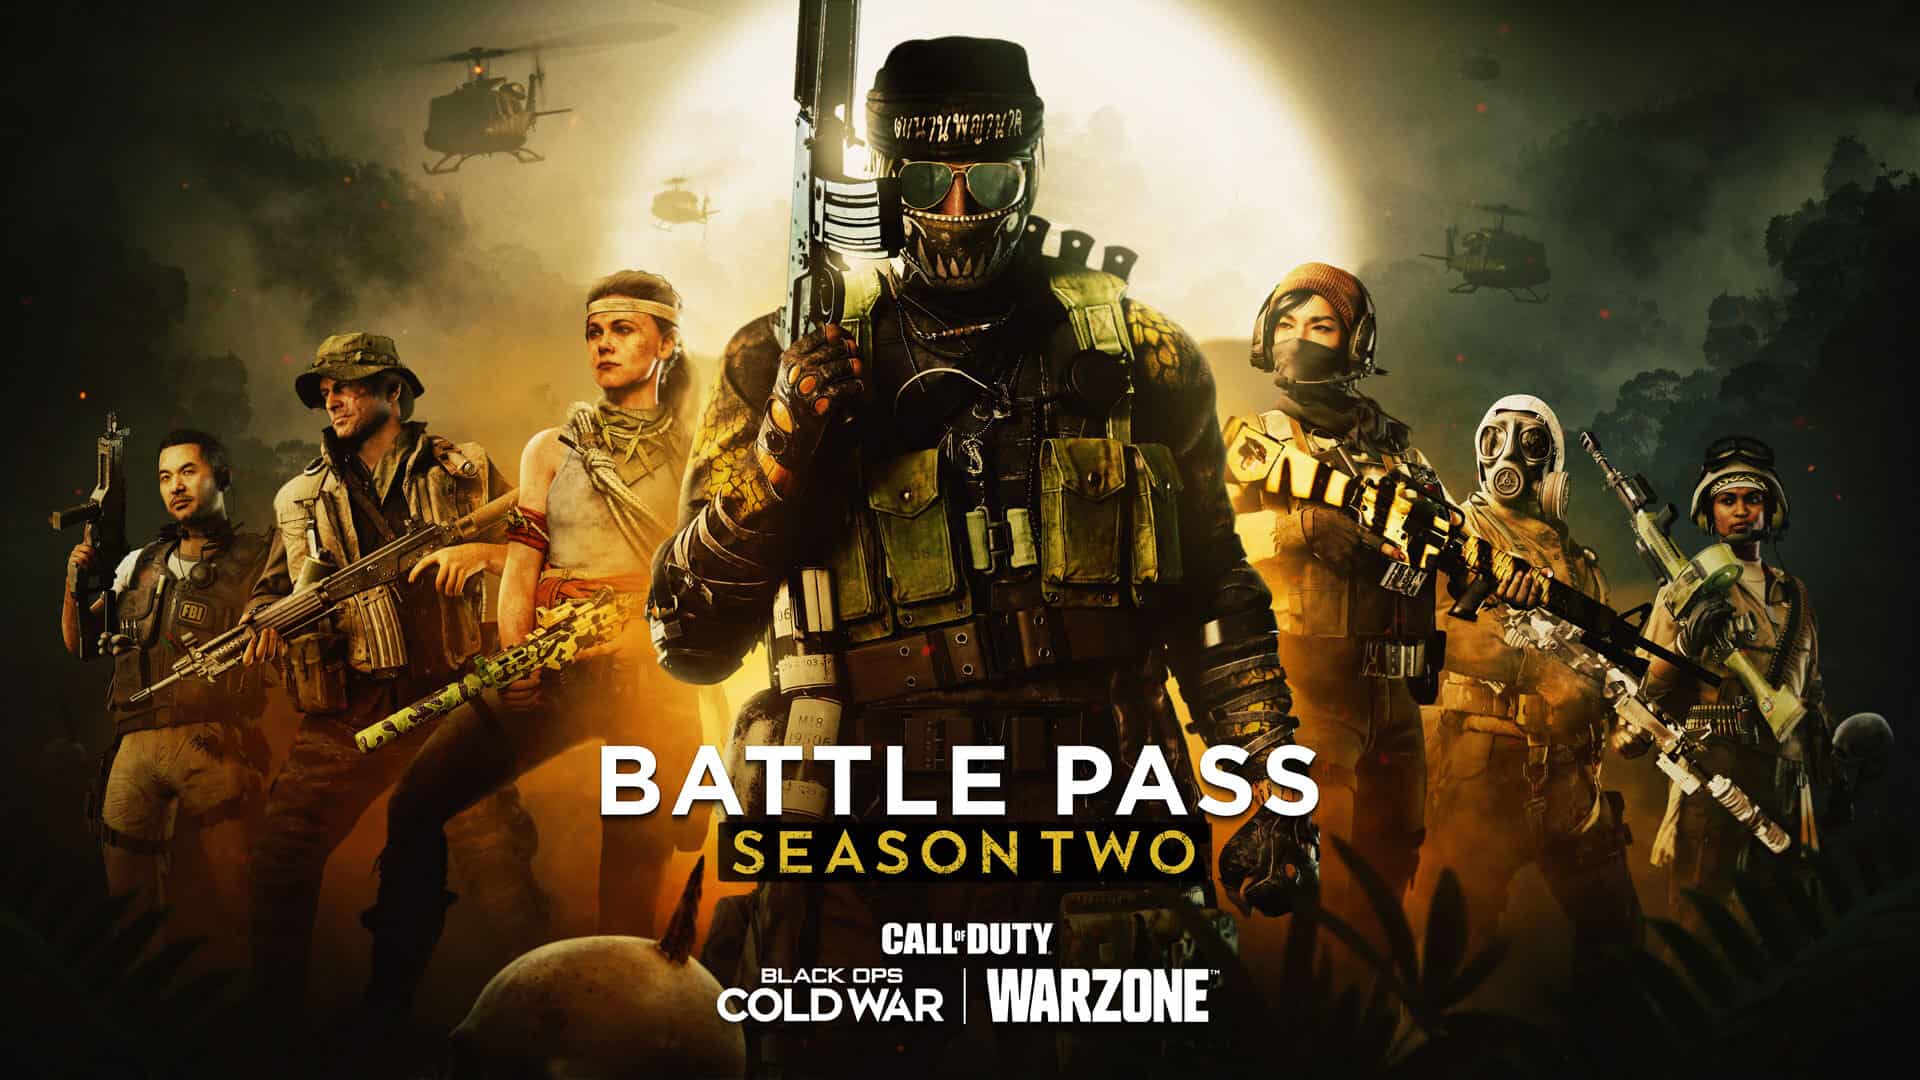 Black Ops Cold War & Warzone Season 2 Battle Pass